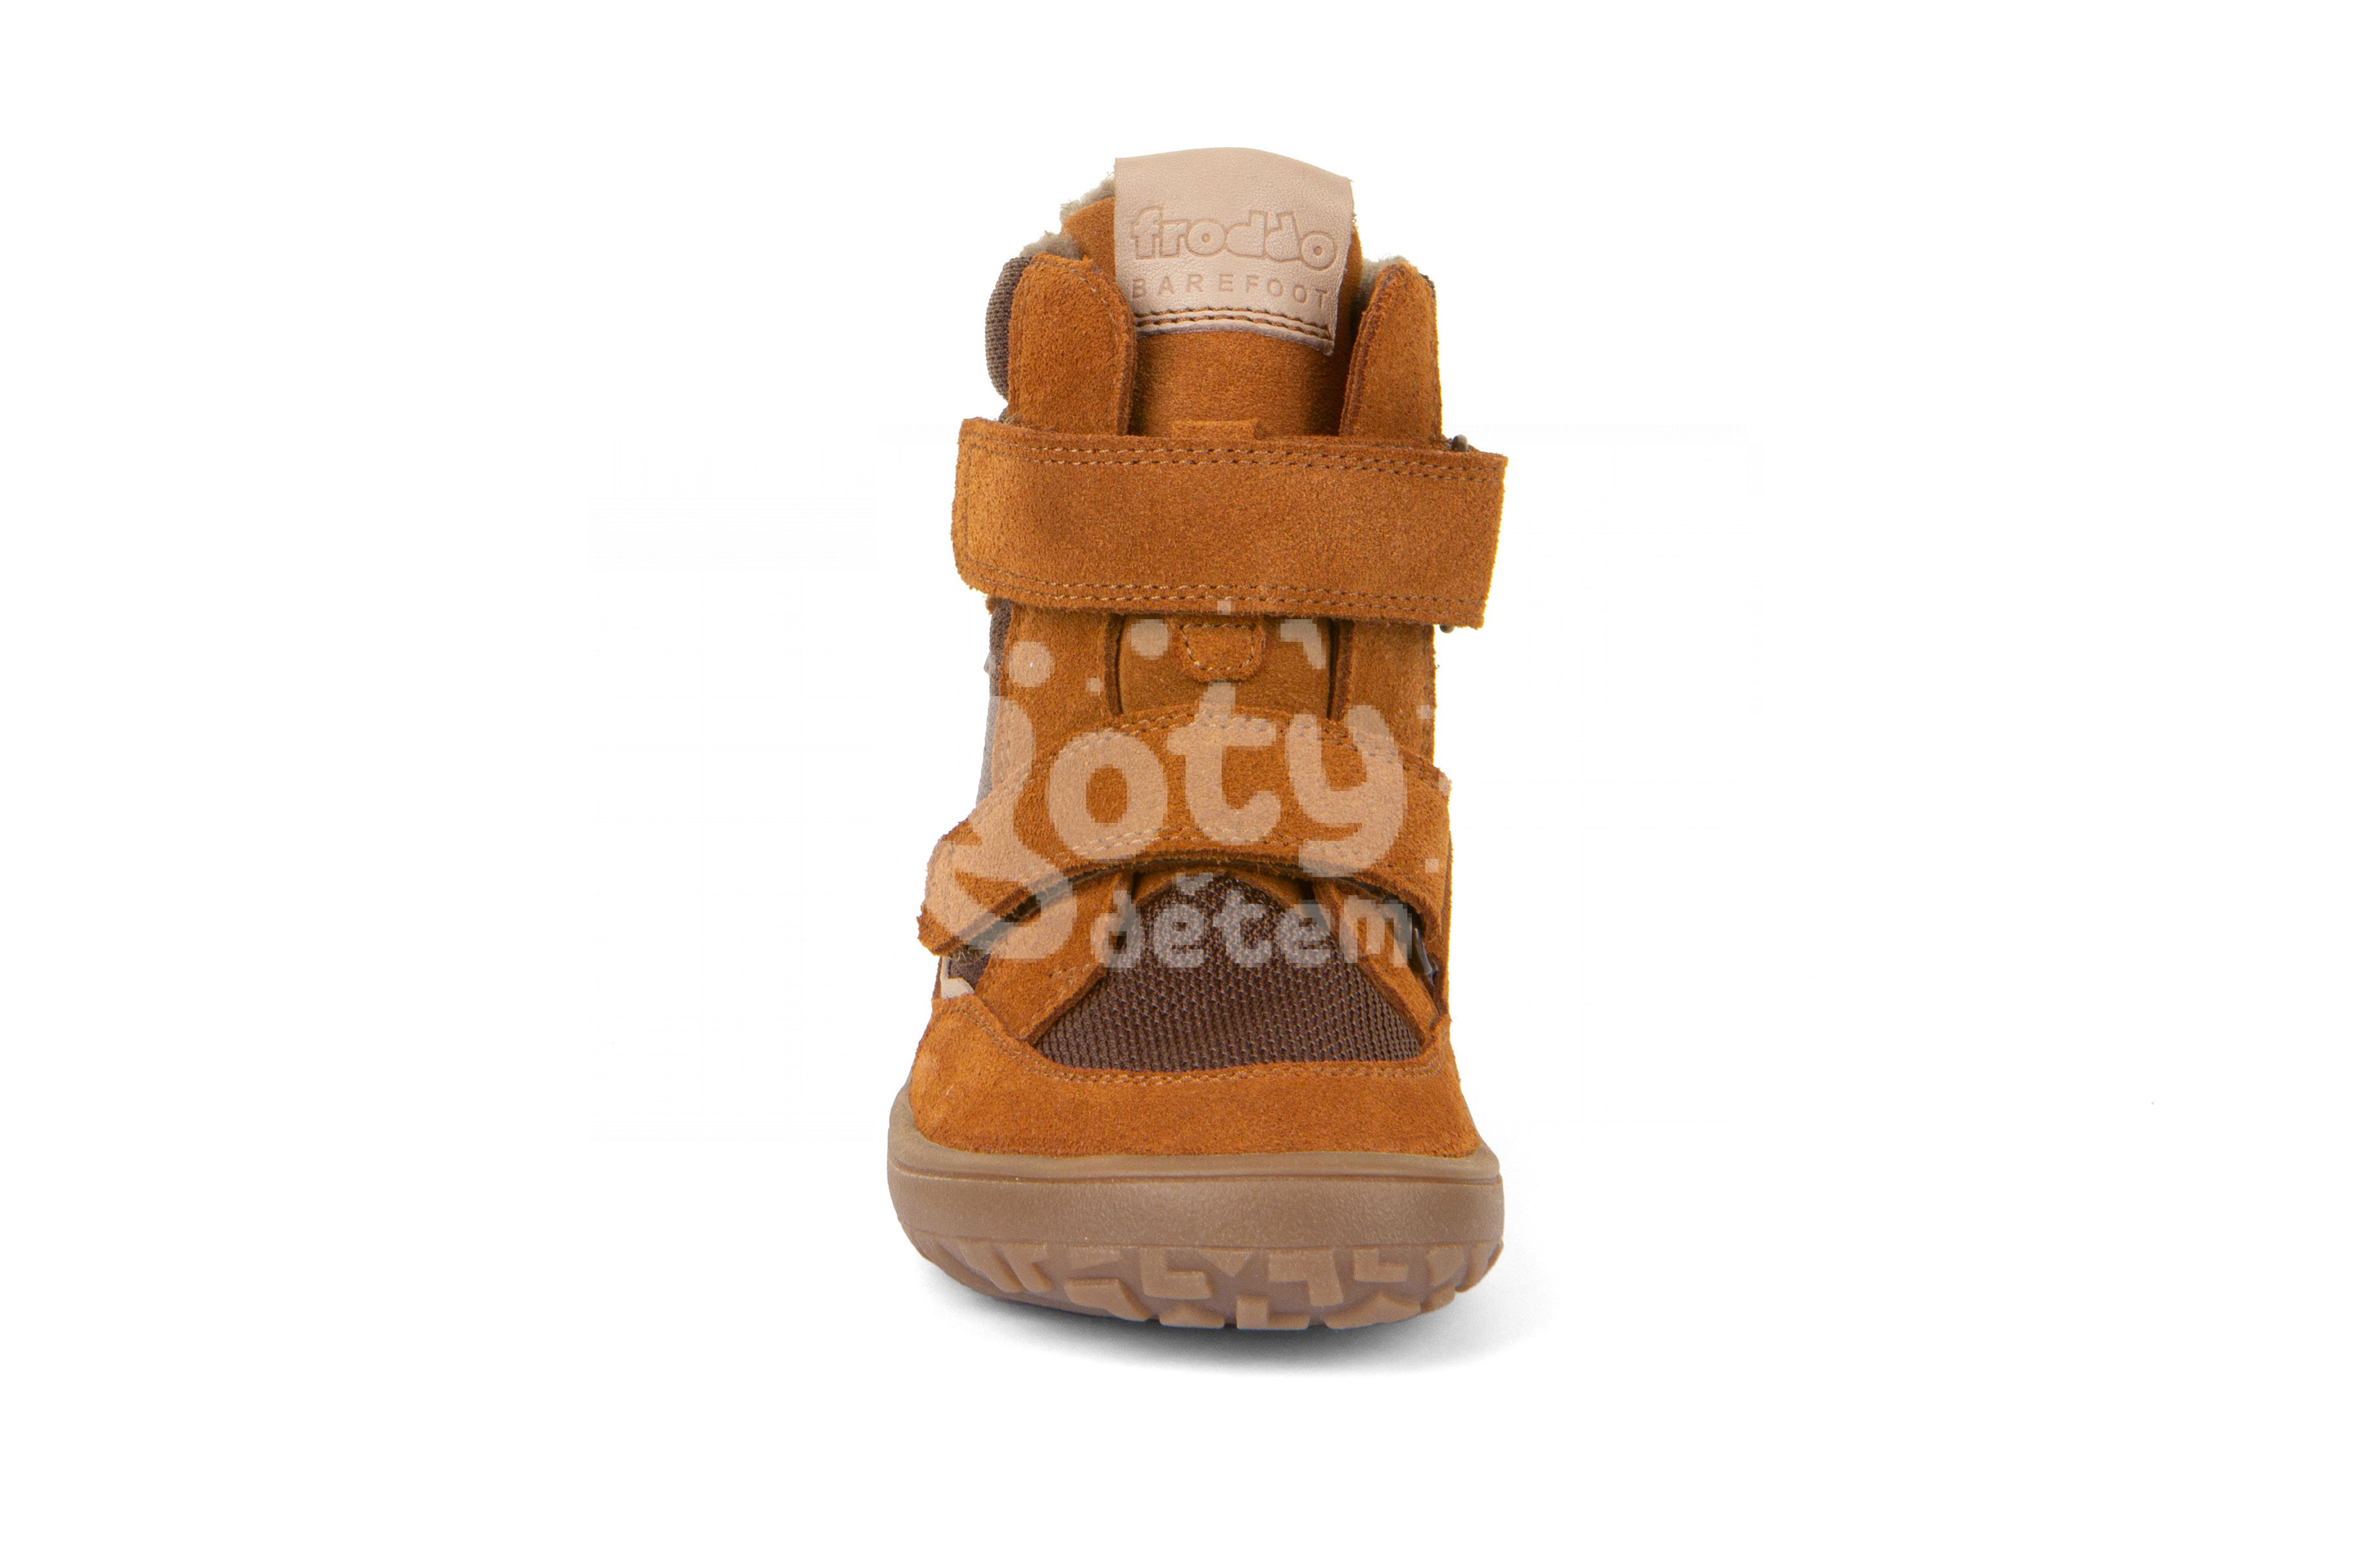 Zimní Froddo barefoot boty G3160205-1 Brown